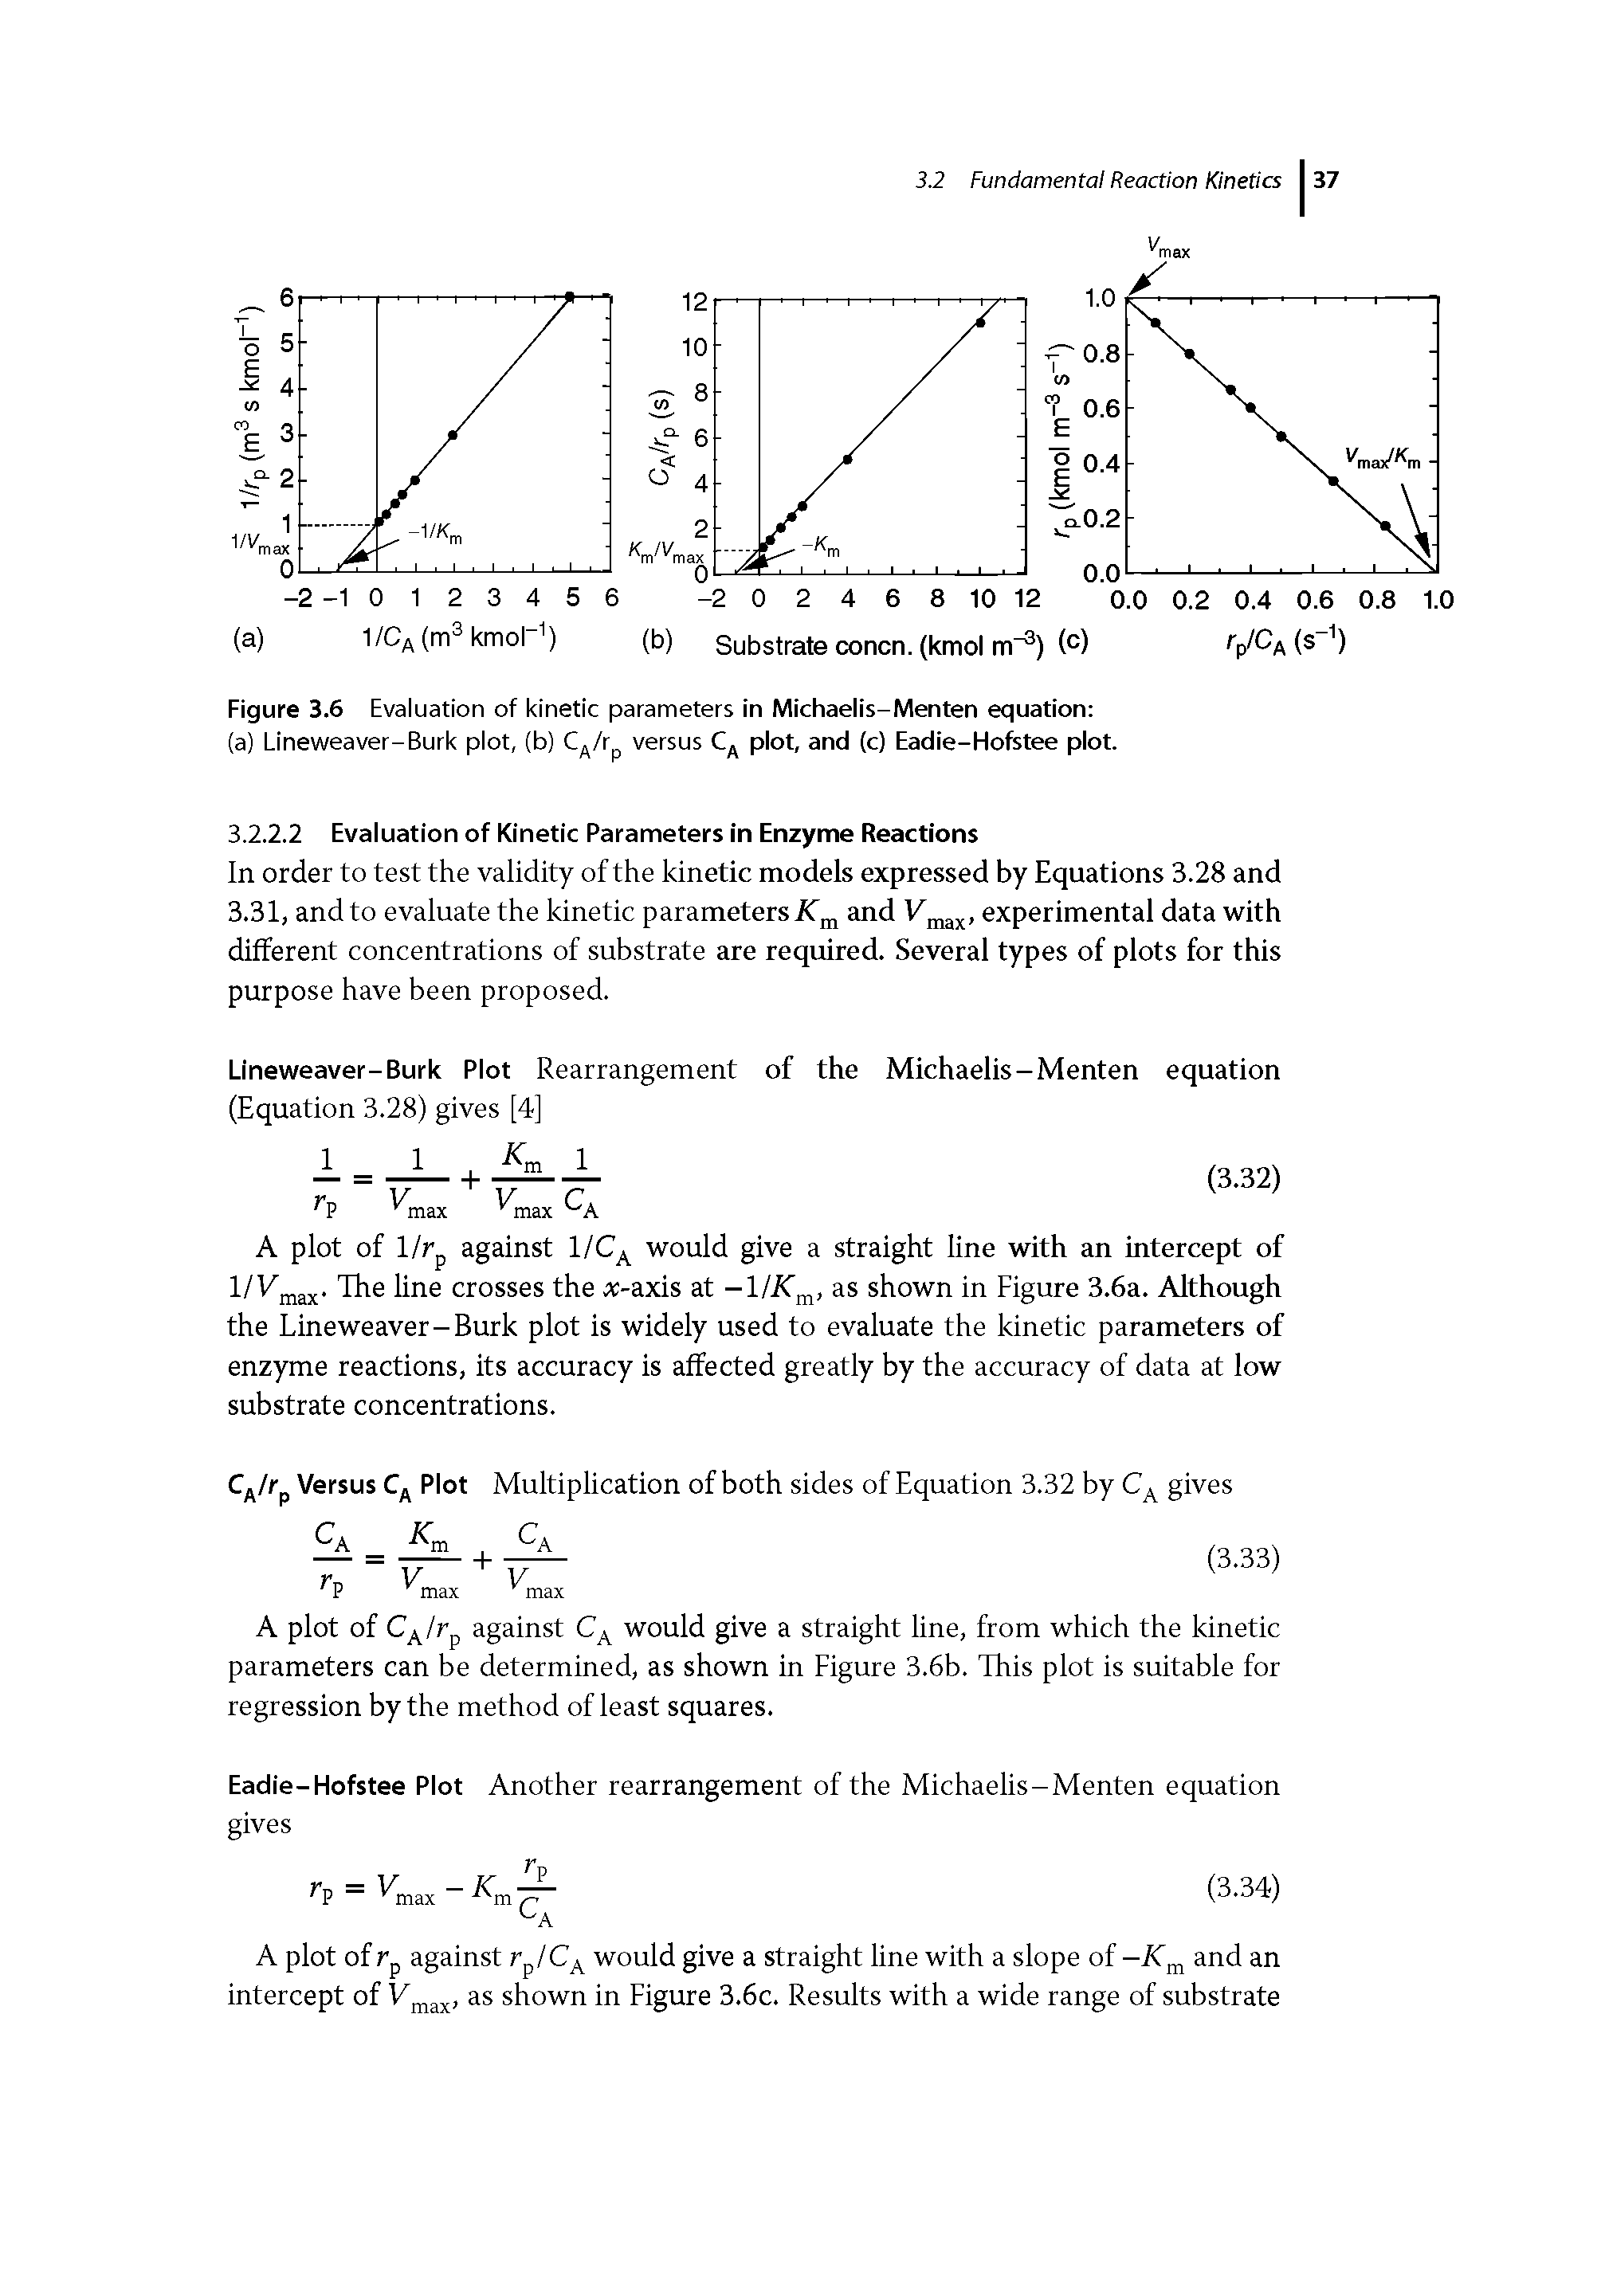 Figure 3.6 Evaluation of kinetic parameters in Michaelis-Menten equation (a) Lineweaver-Burk plot, (b) C /r versus plot, and (c) Eadie-Hofstee plot.